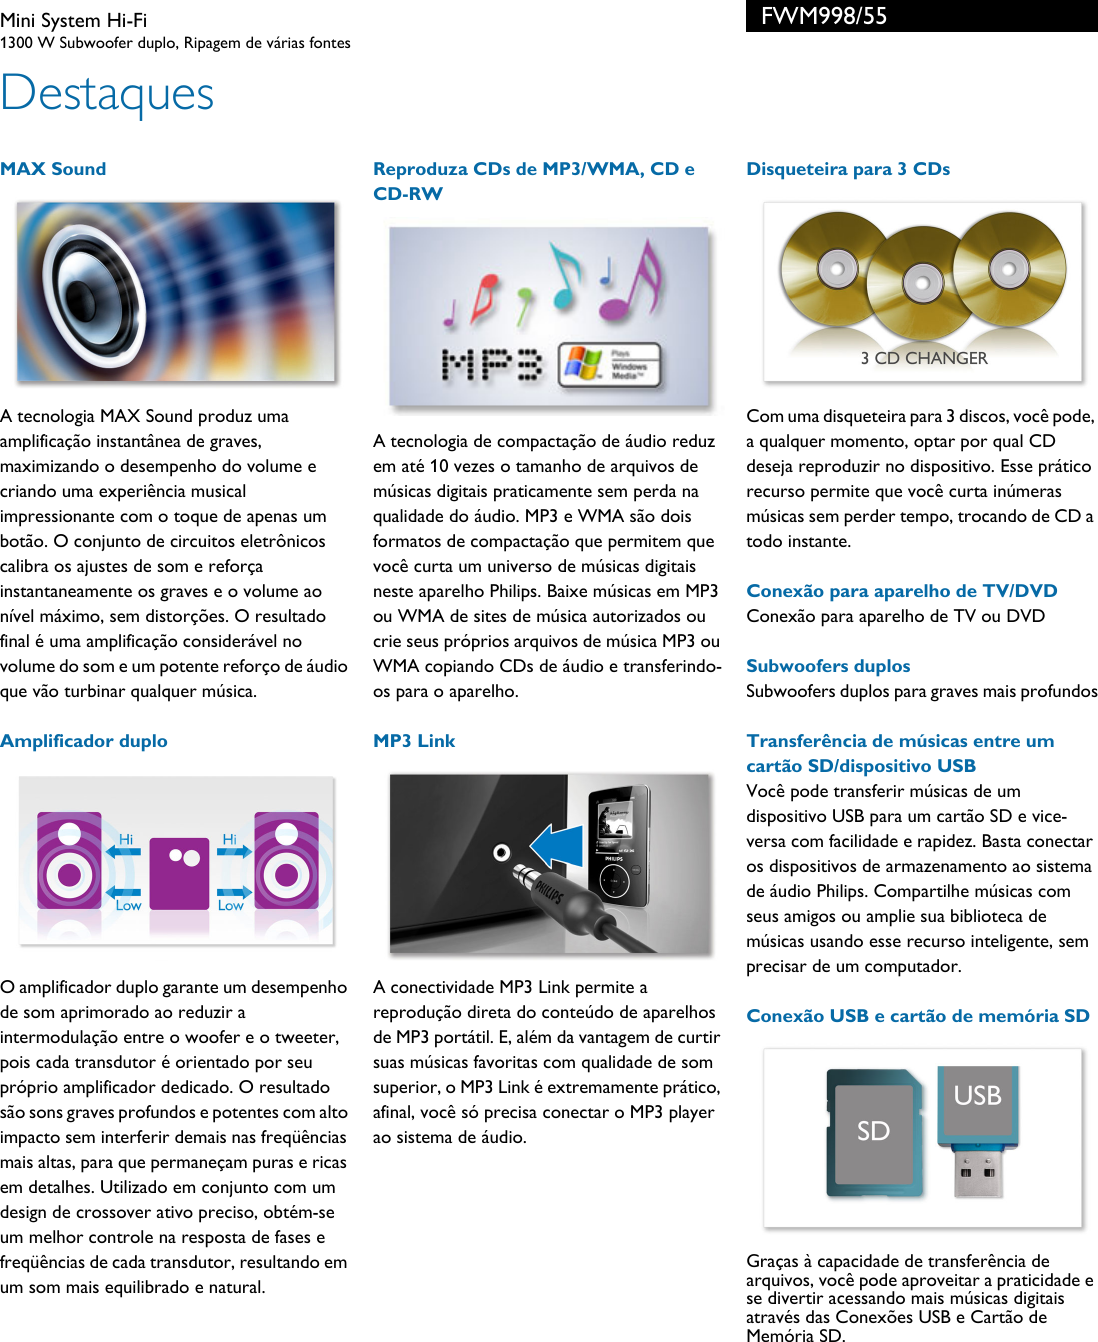 Page 2 of 3 - Philips FWM998/55 Mini System Hi-Fi User Manual Folheto Fwm998 55 Pss Brpbr